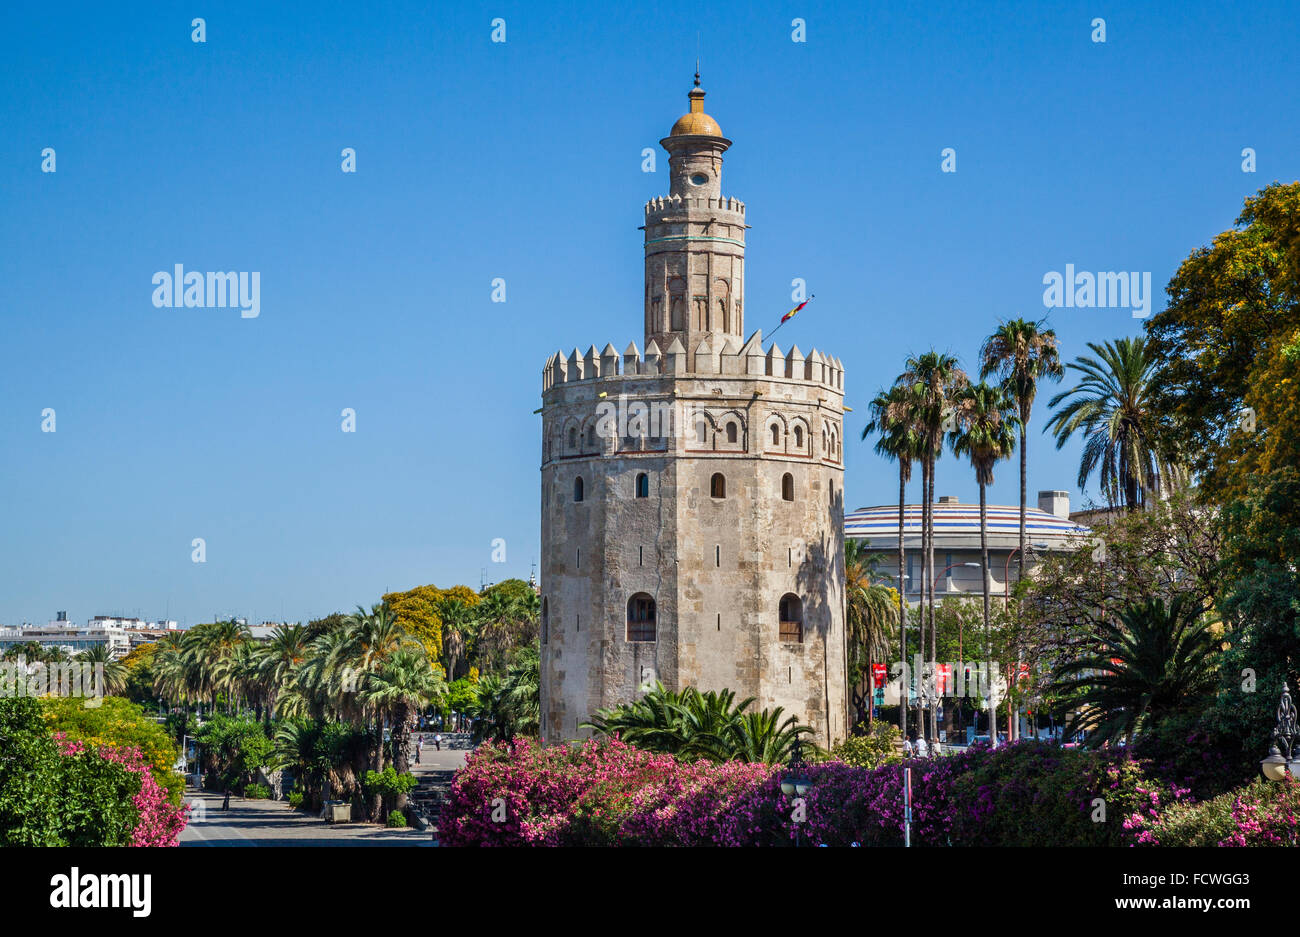 España, Andalucía, provincia de Sevilla, Sevilla, vista de la Torre del Oro, del siglo xiii dodecagonal atalaya militar sobre la ba Foto de stock